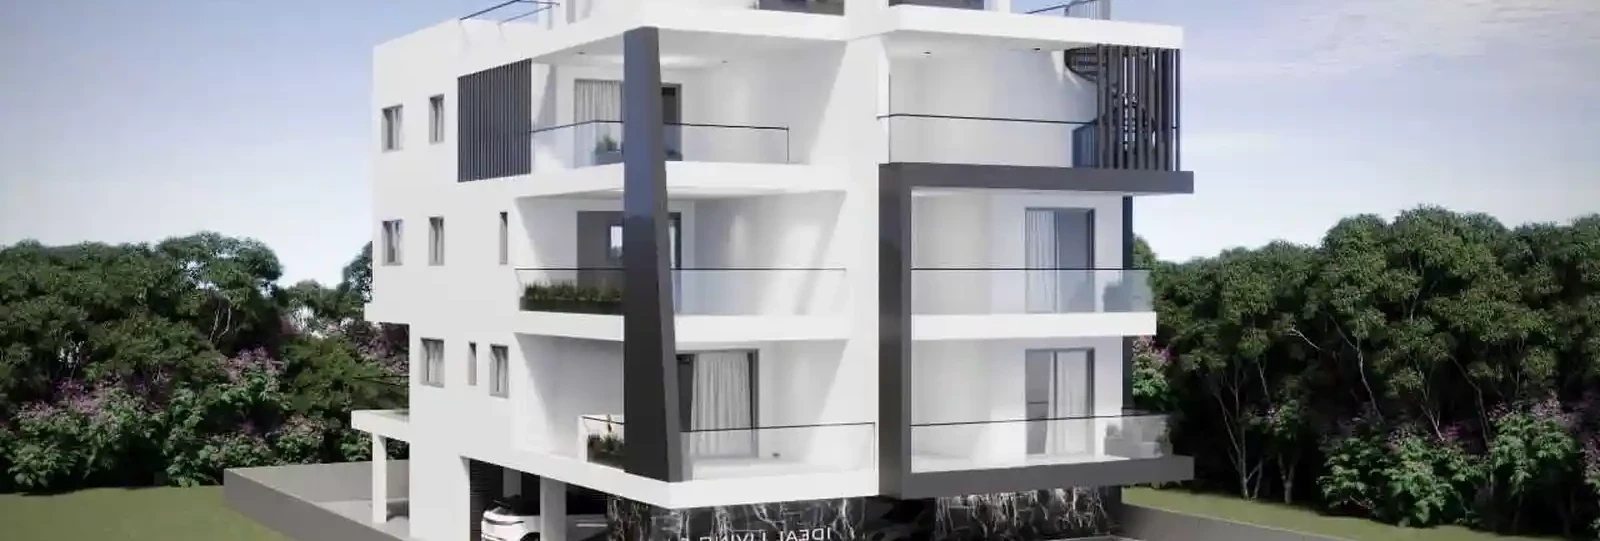 2-bedroom penthouse fоr sаle €279.000, image 1